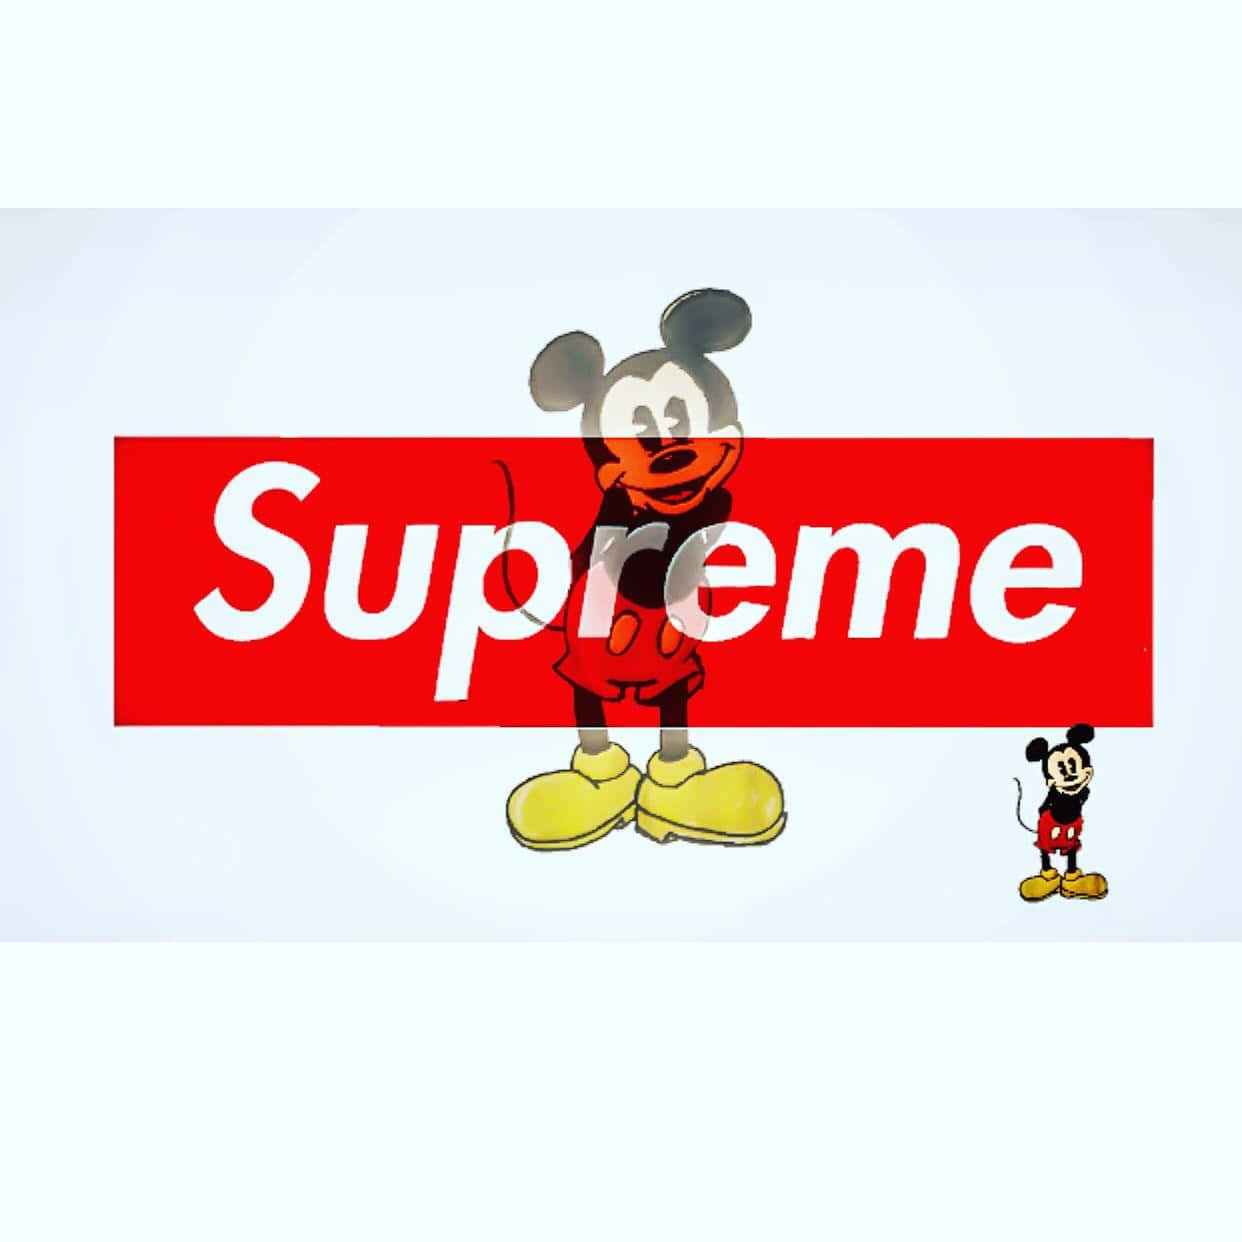 Supreme x Mickey Mouse - Style Has No Limits Wallpaper